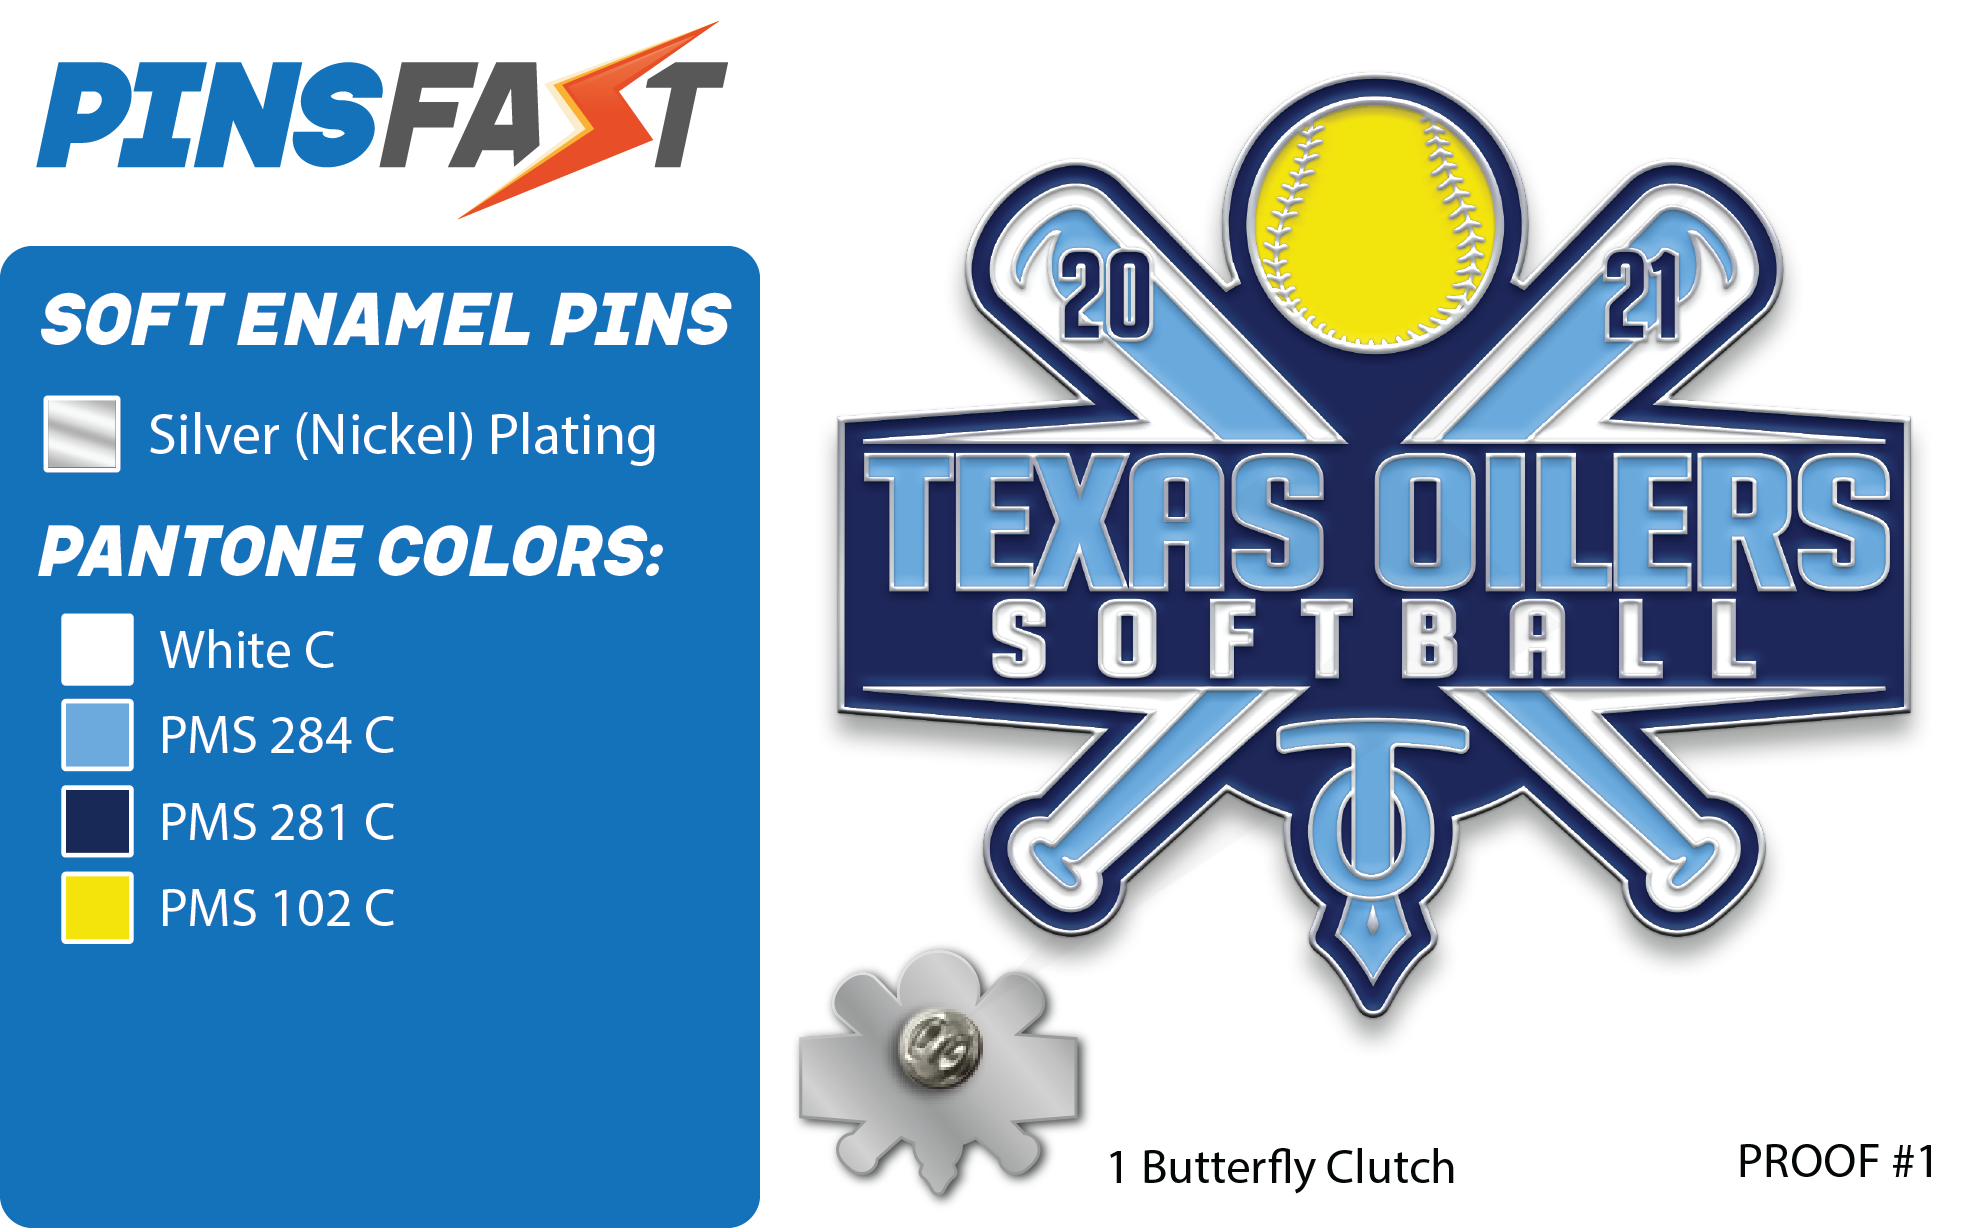 Texas Oilers Softball Pins